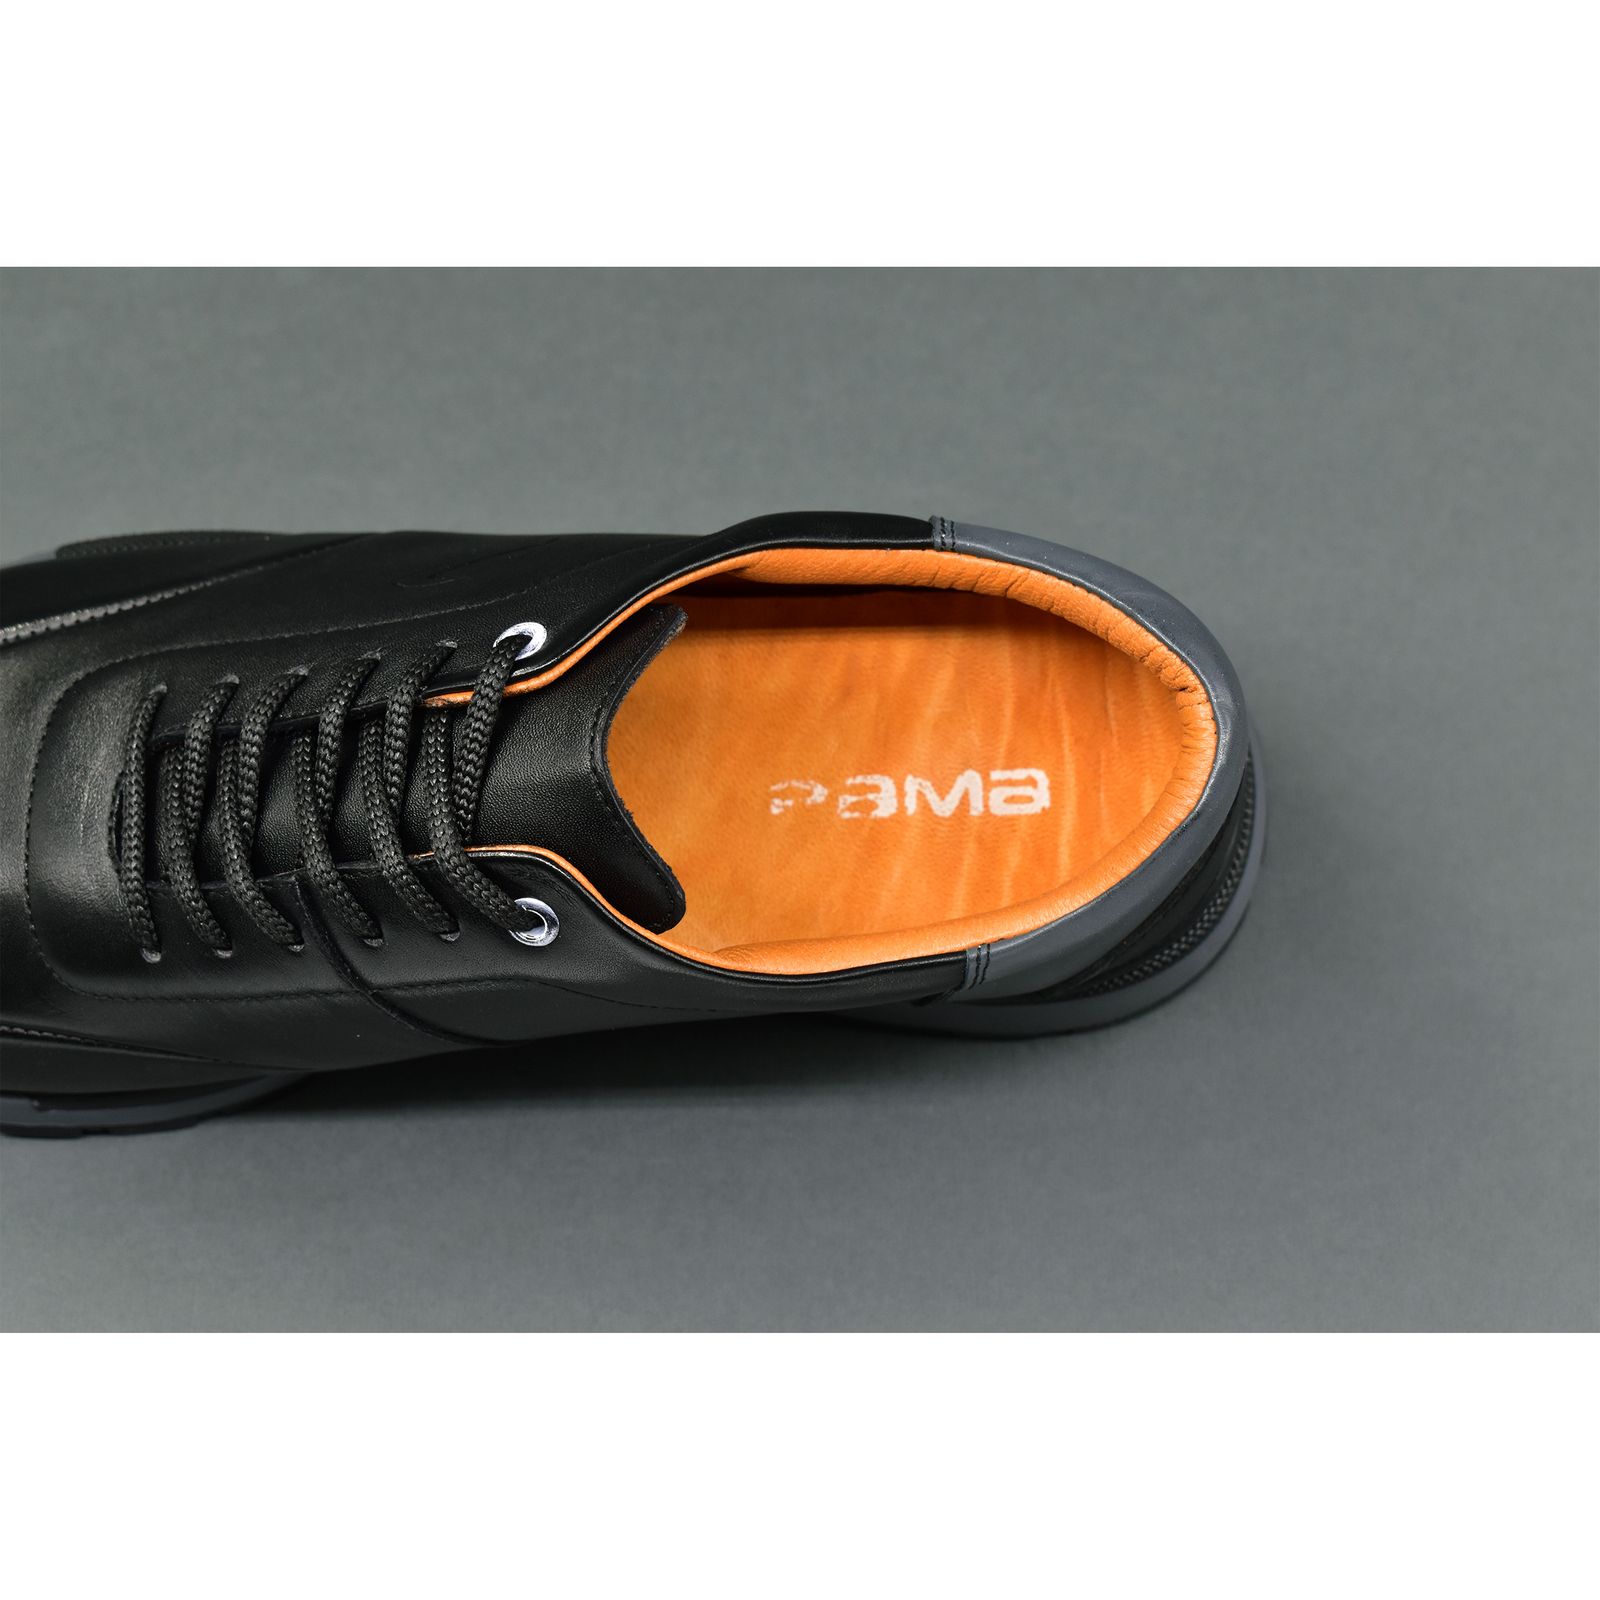 کفش روزمره مردانه پاما مدل ME-680 کد G1807 -  - 7